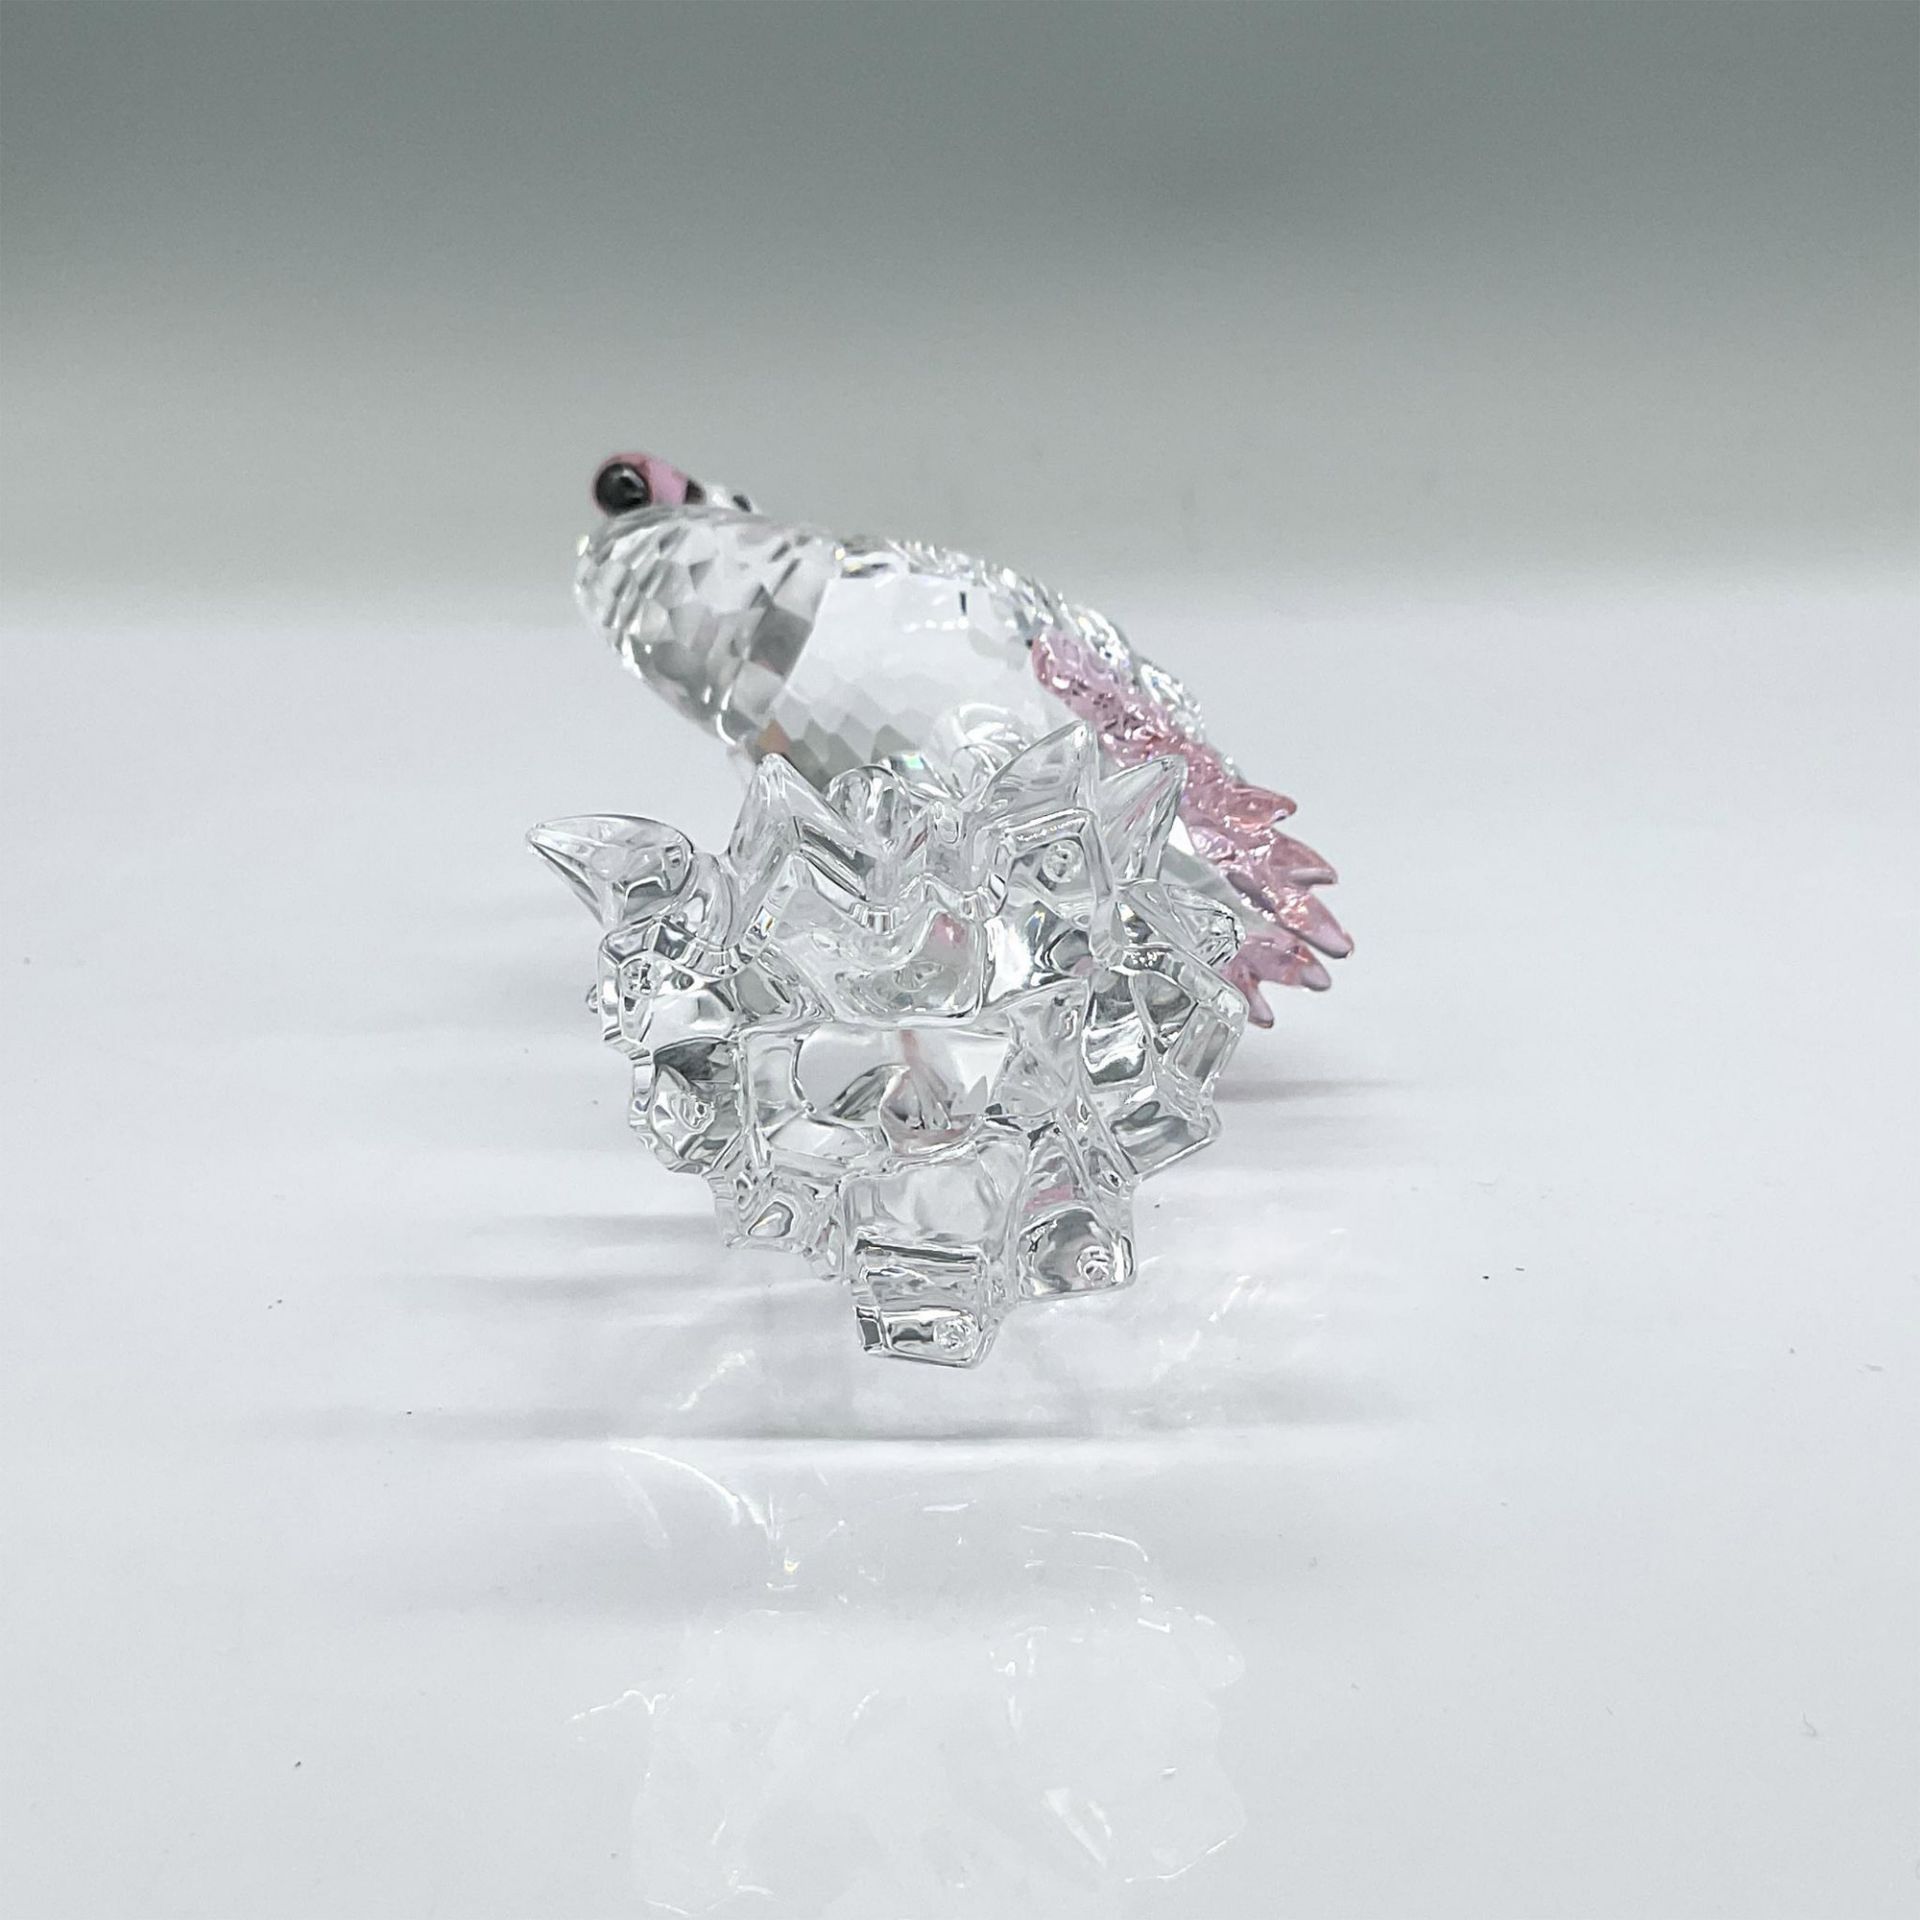 Swarovski Crystal Figurine, Flamingo - Image 3 of 4